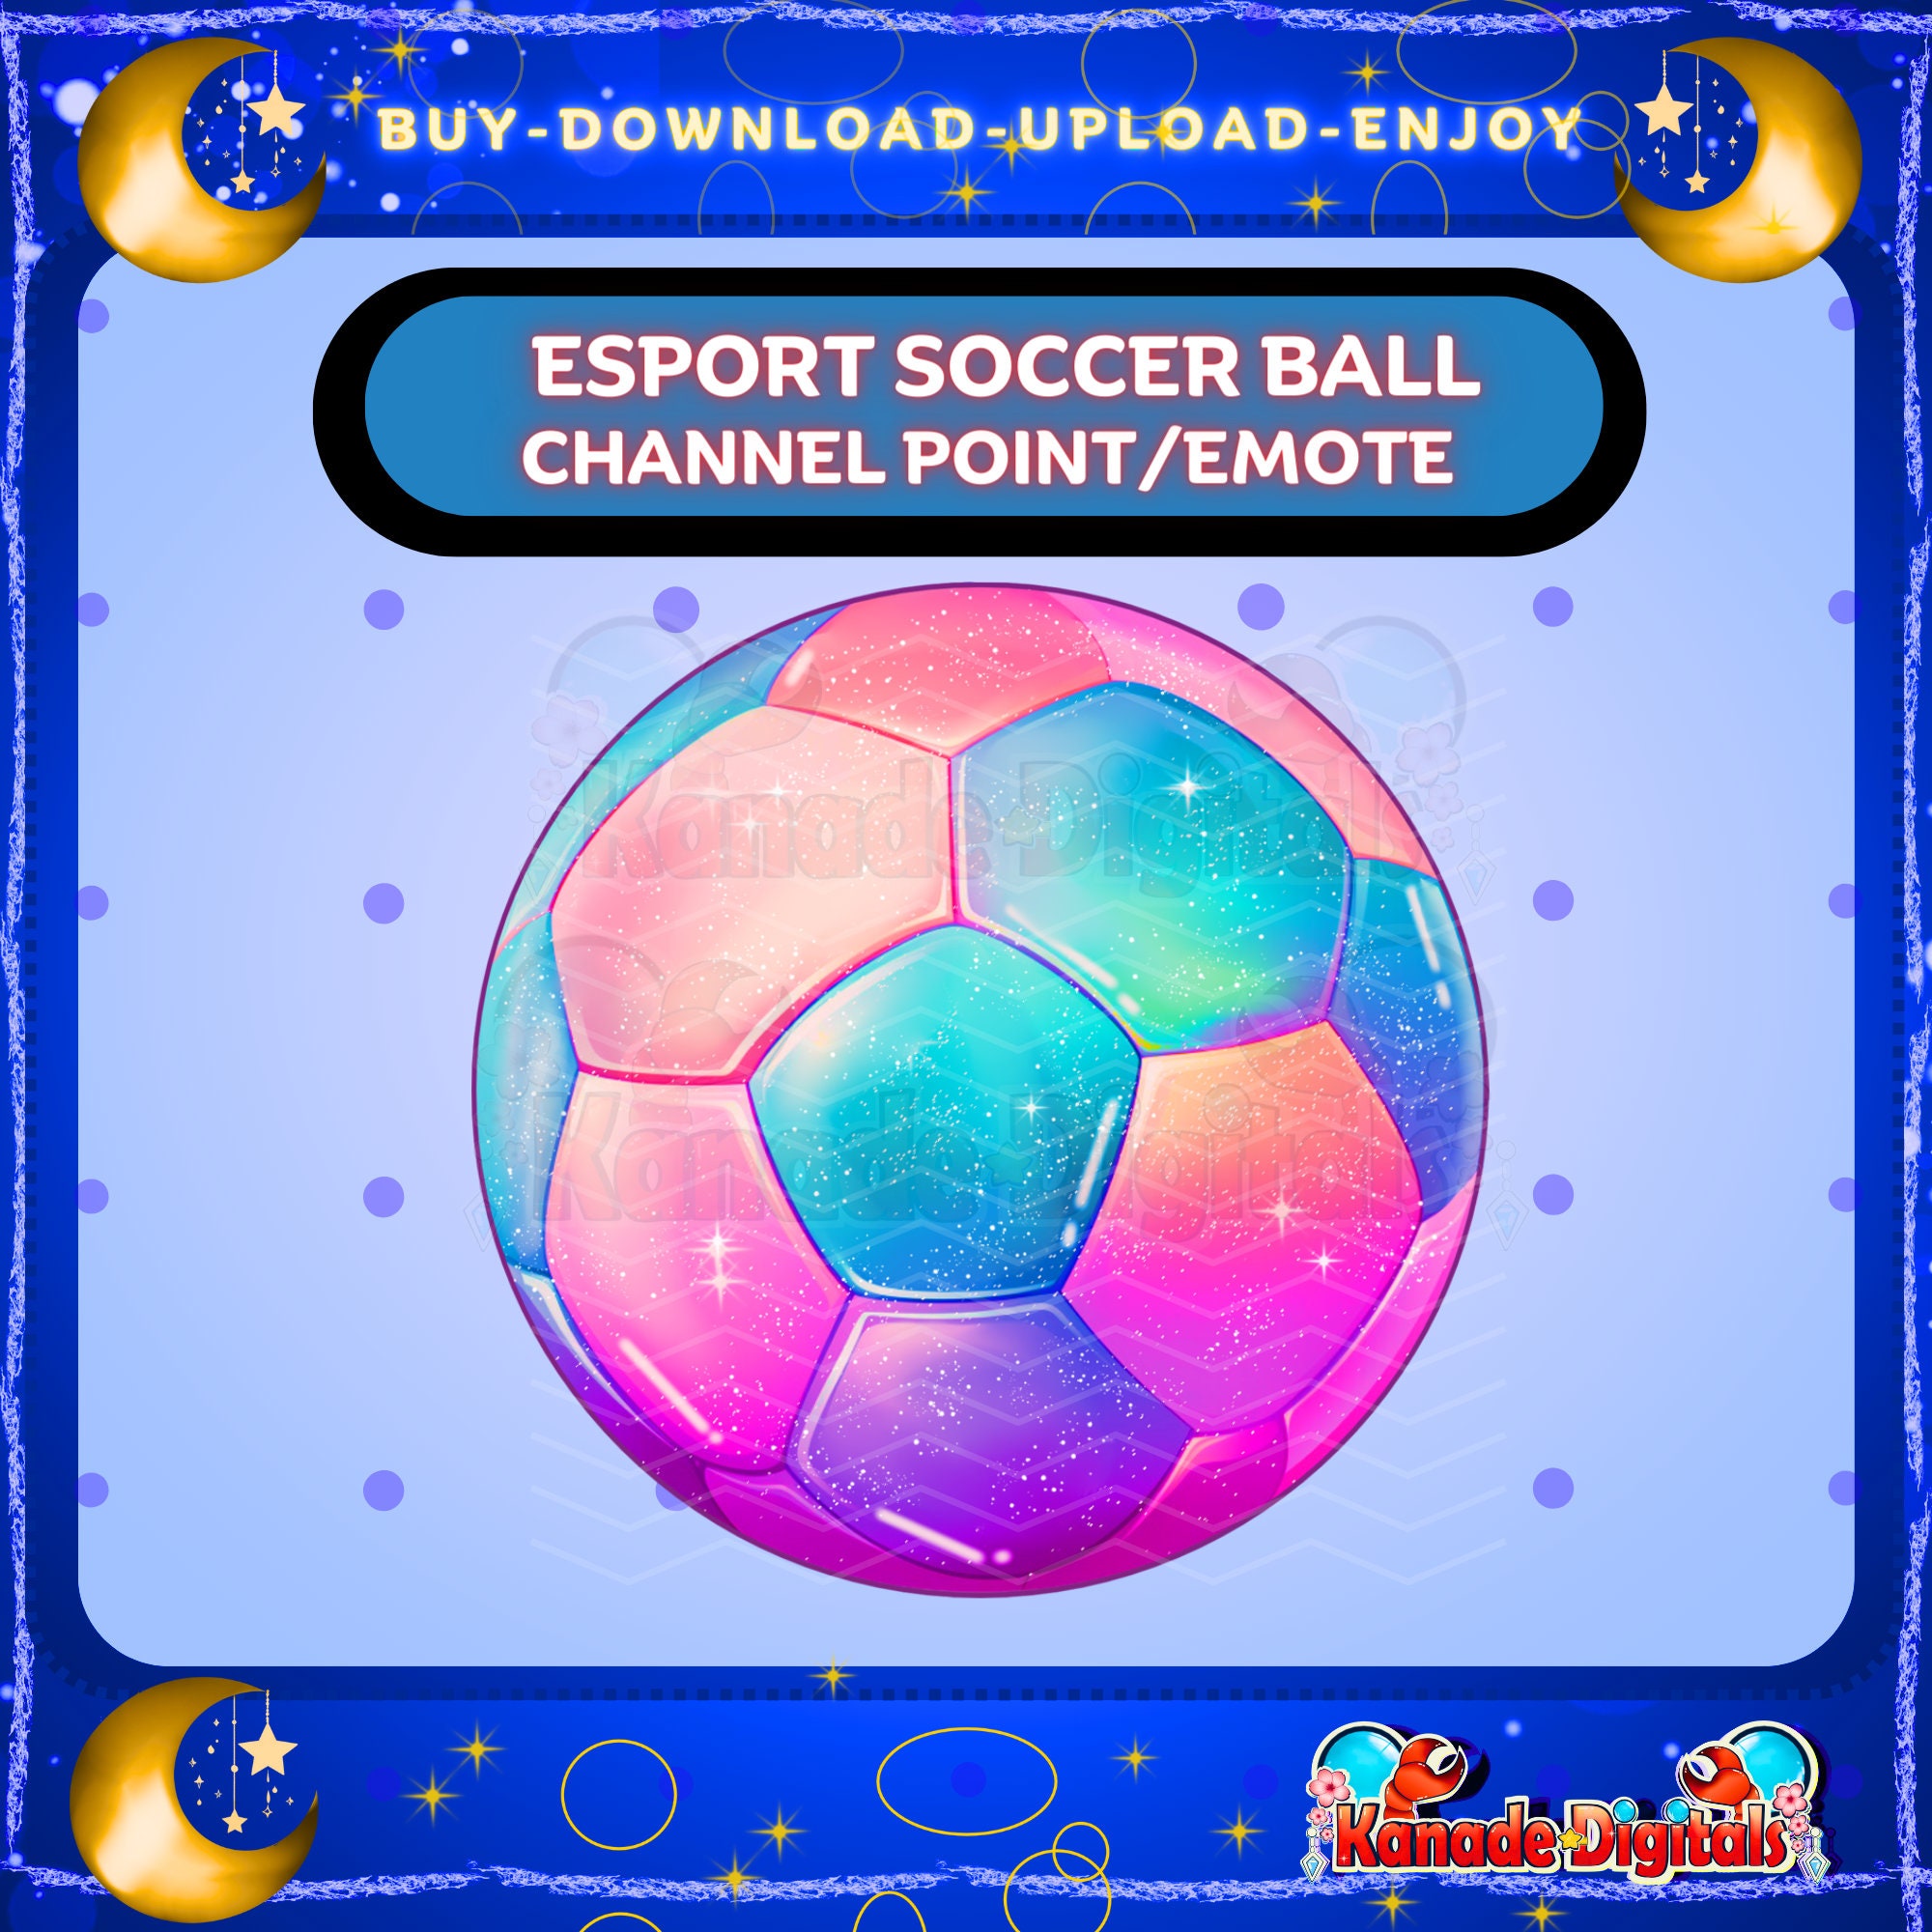 Soccer Ball Channel Point / Emote twitch Stream Emote stream